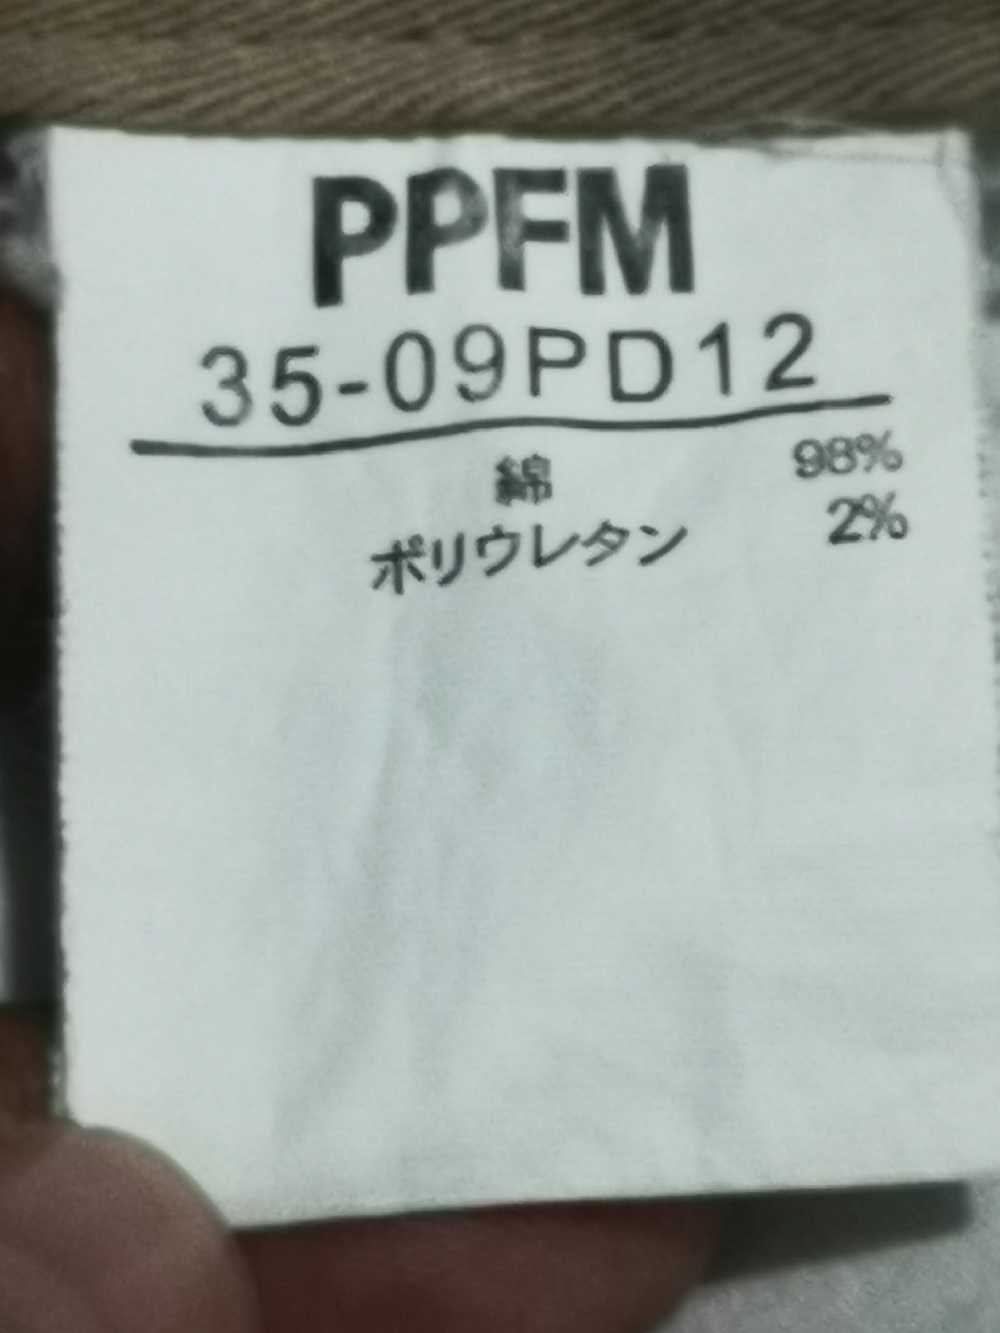 PPFM Japanese Brand PPFM - image 4